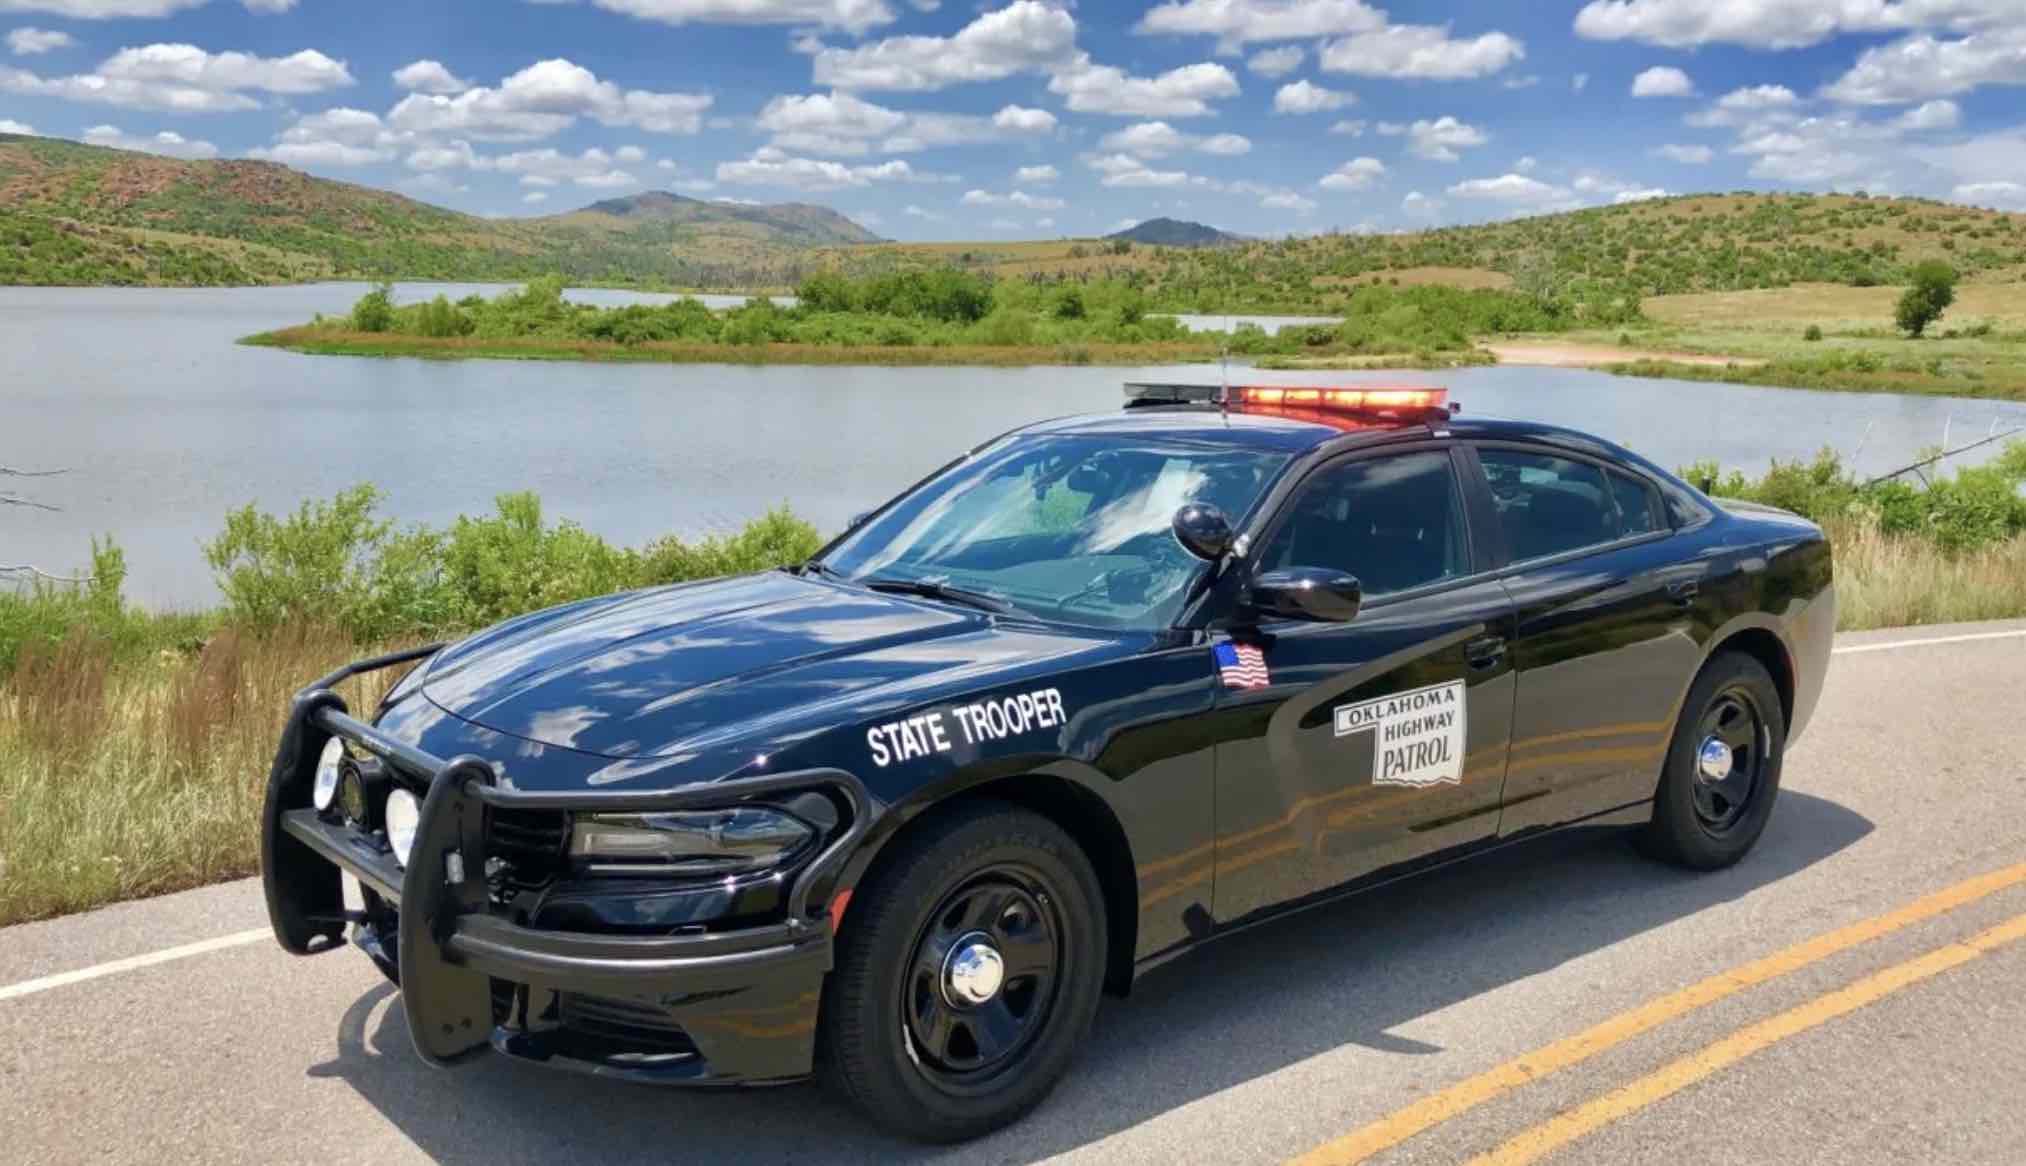 Oklahoma trooper accused of sexually battering female trucker - TheTrucker.com